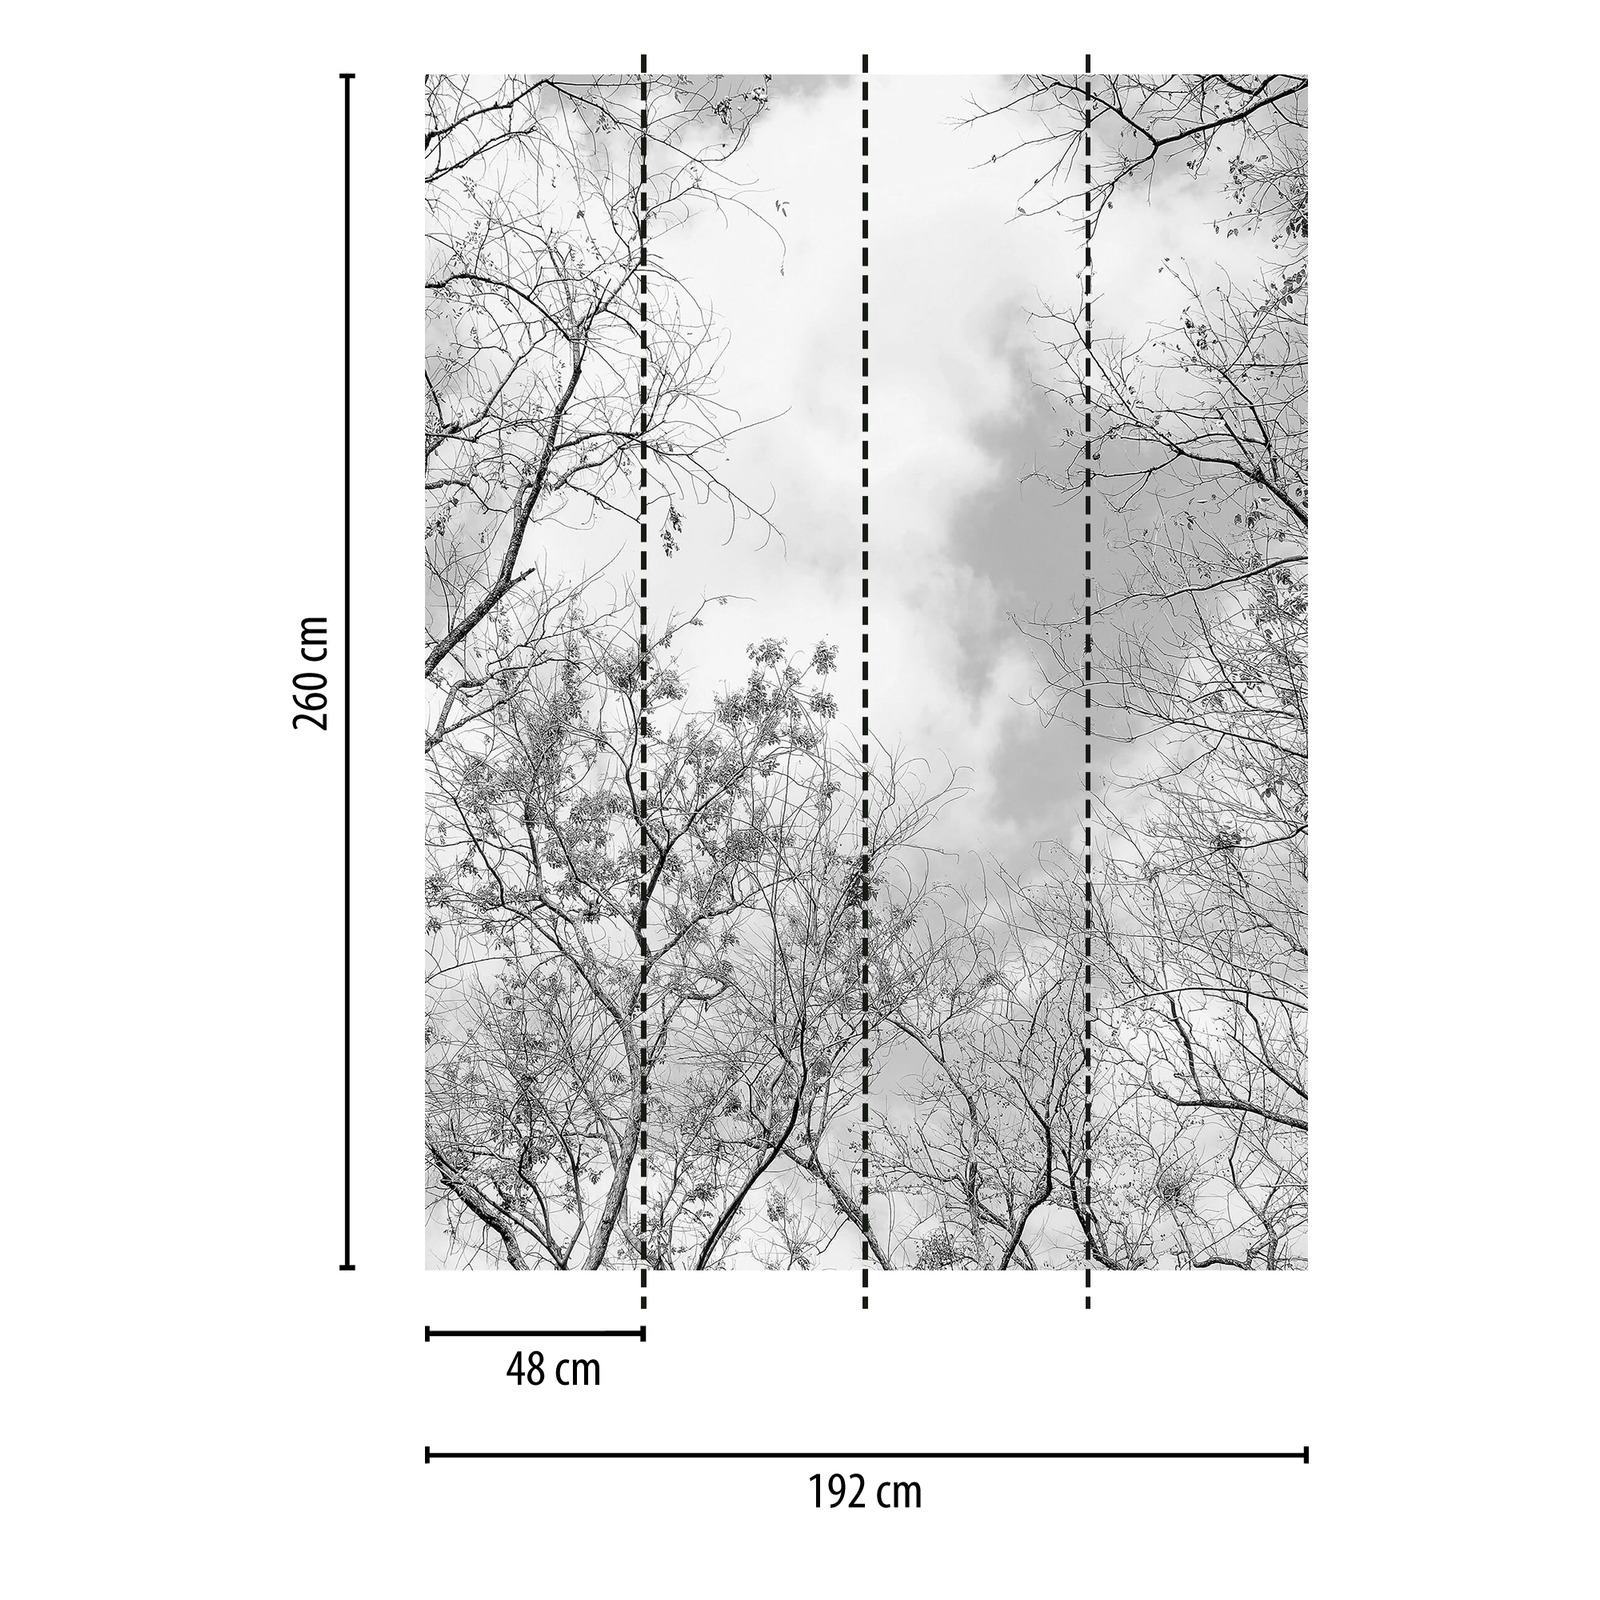             Schwarz-Weiß Fototapete Bäume & Himmel, Hochformat
        